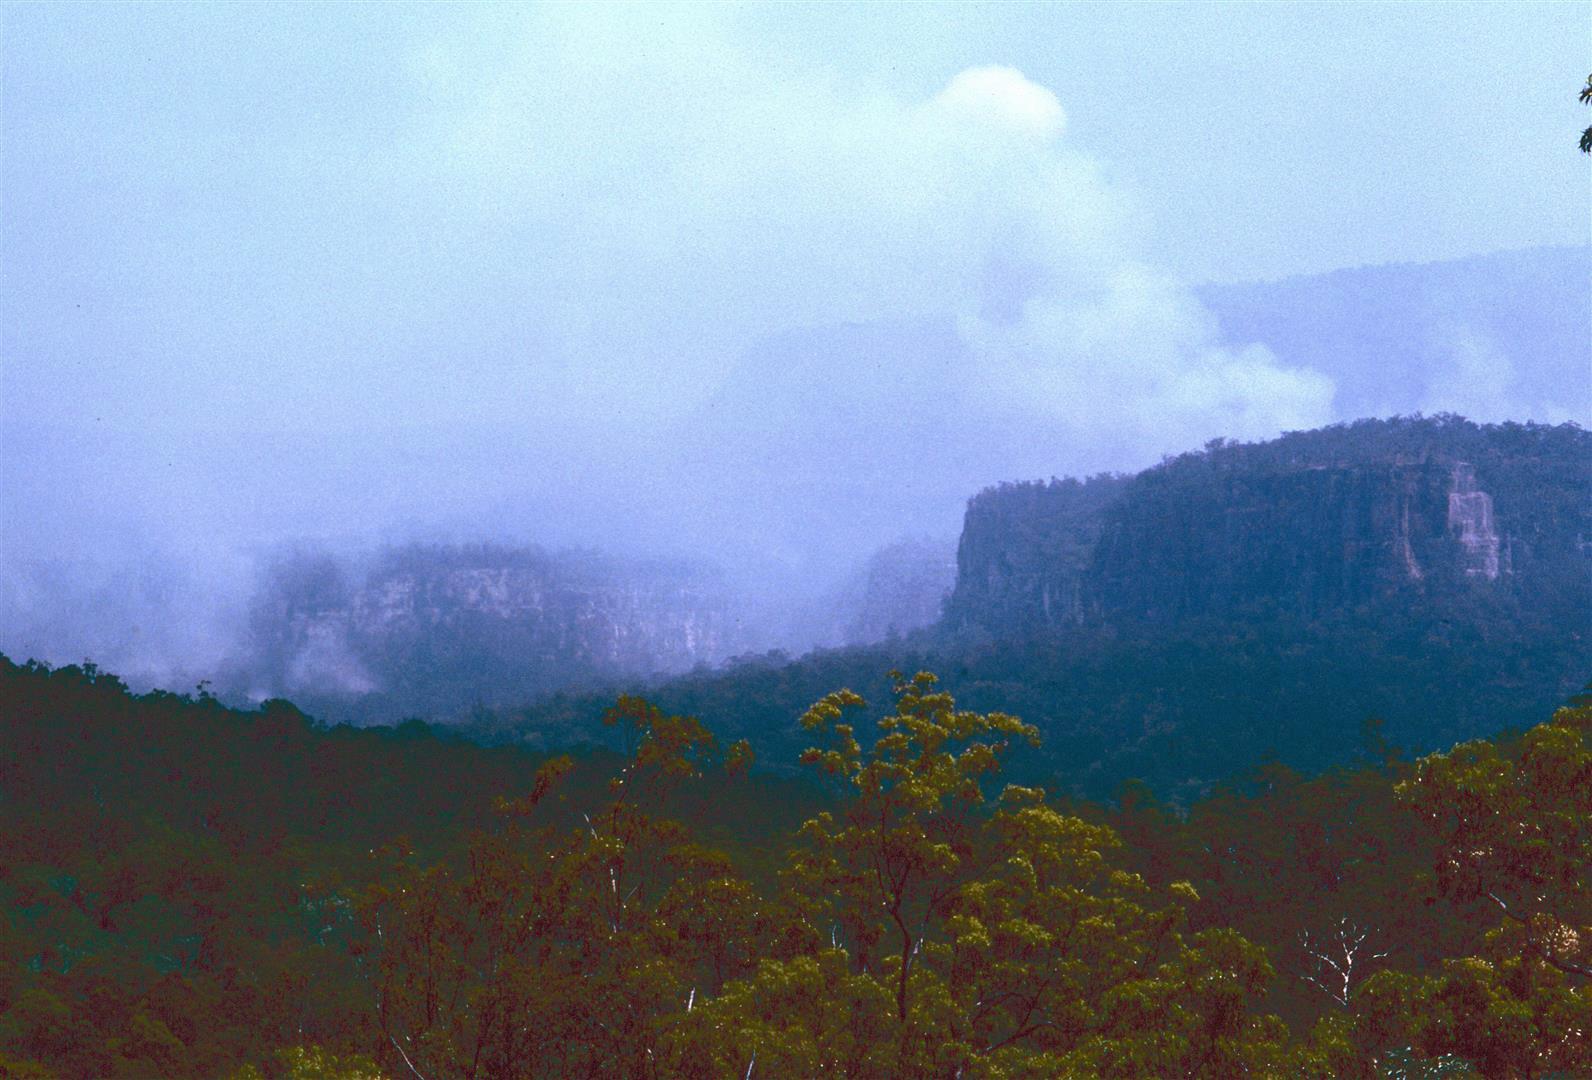  Carnarvon Gorge. Photograph by Bill Morley.